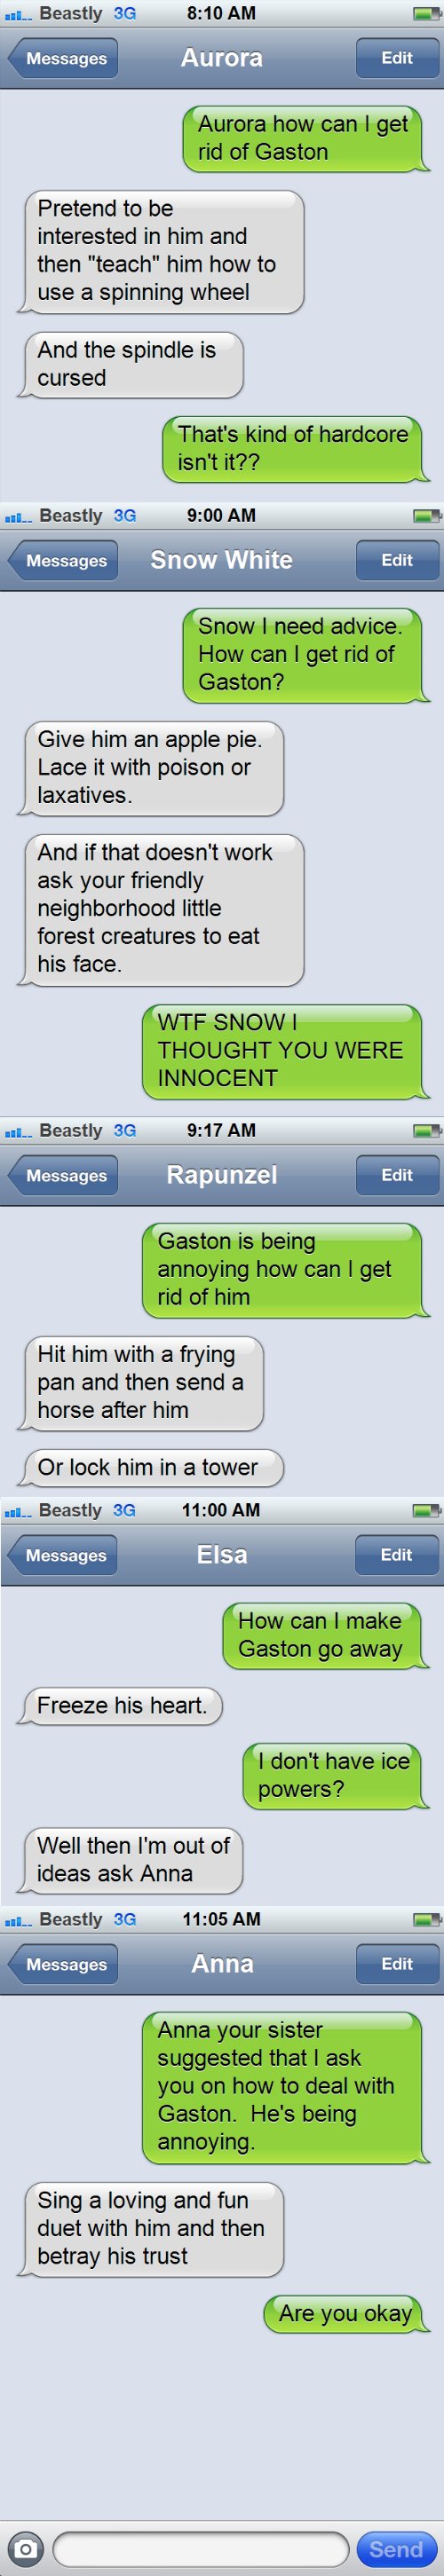 Disney Princesses Text Belle Advice to Get Rid of Gaston